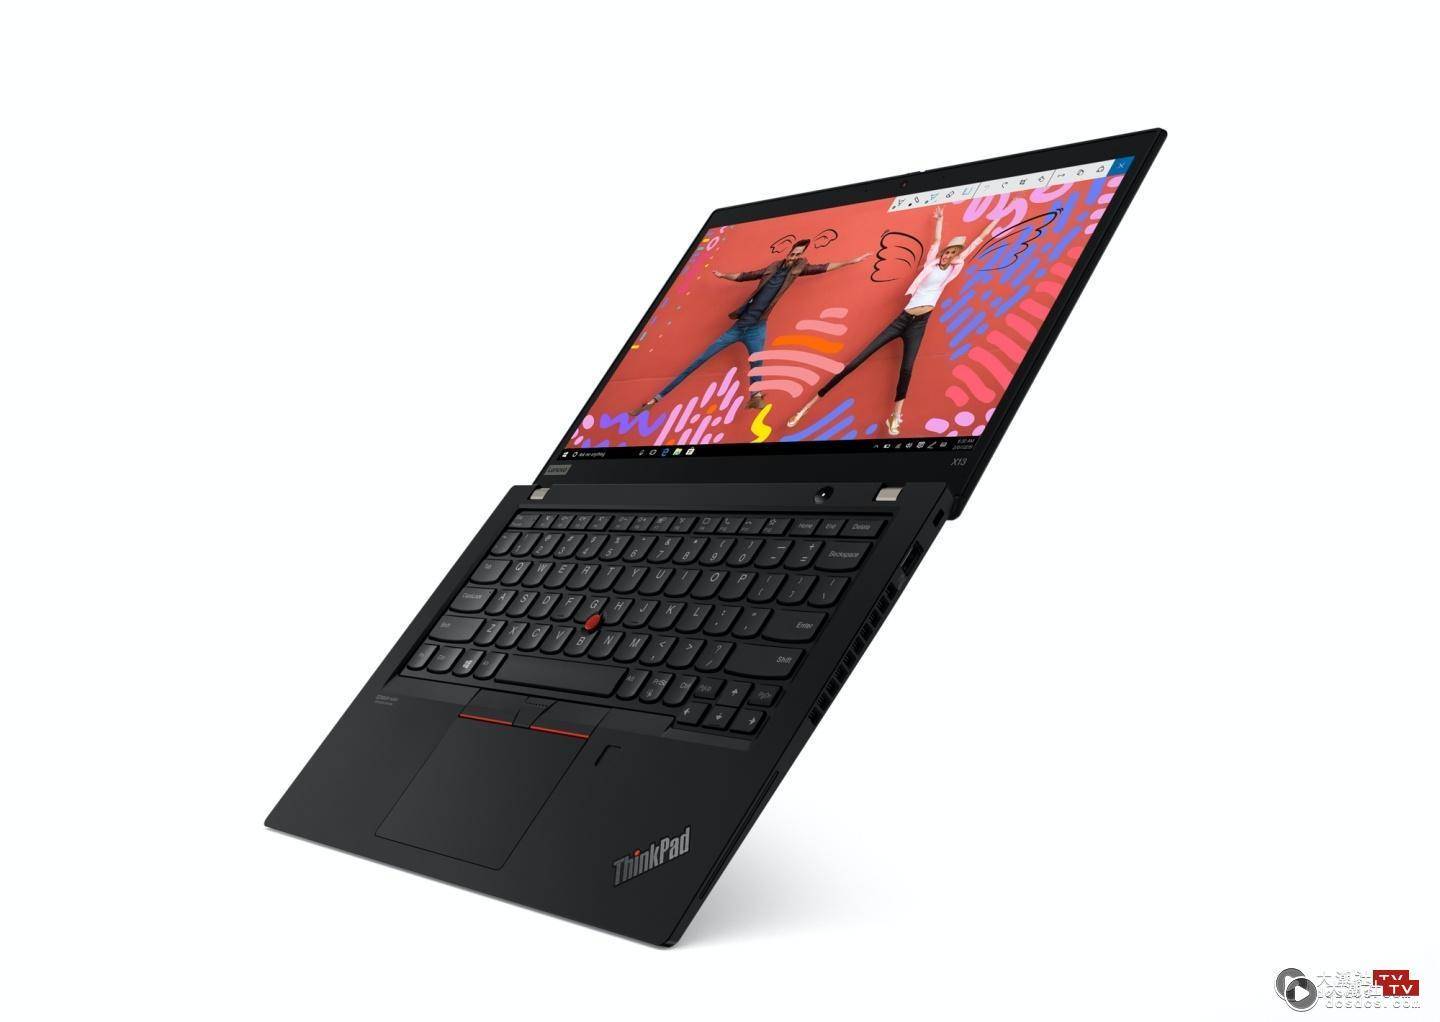 Lenovo 推出三款‘ ThinkPad 系列 ’全新商用笔电！搭载第 11 代 Intel Core vPro 处理器，连网能力和效能都提升了